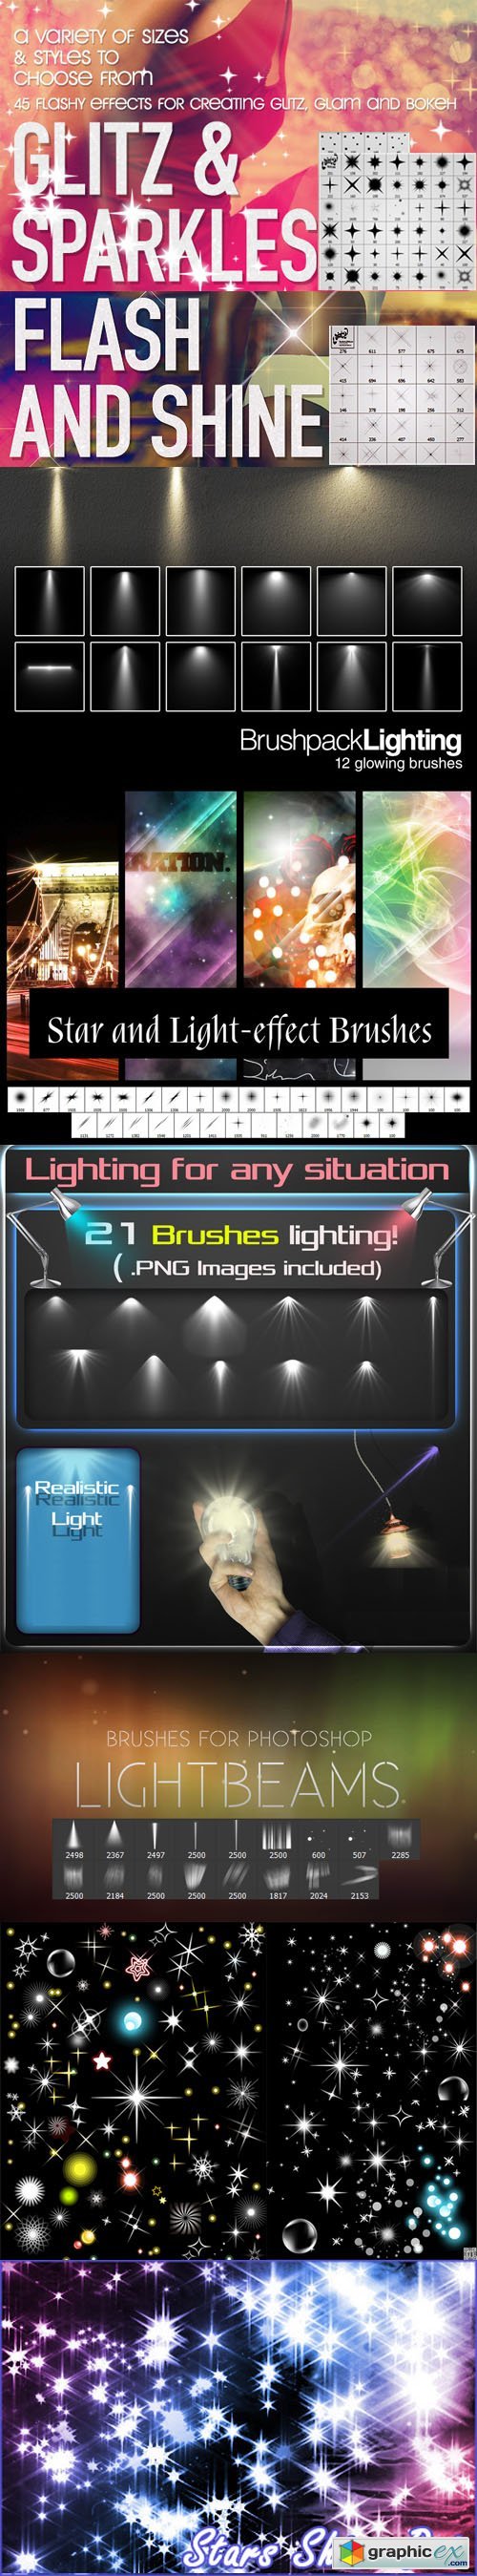 Stars & Flashy Lighting Brushes Pack for Photoshop